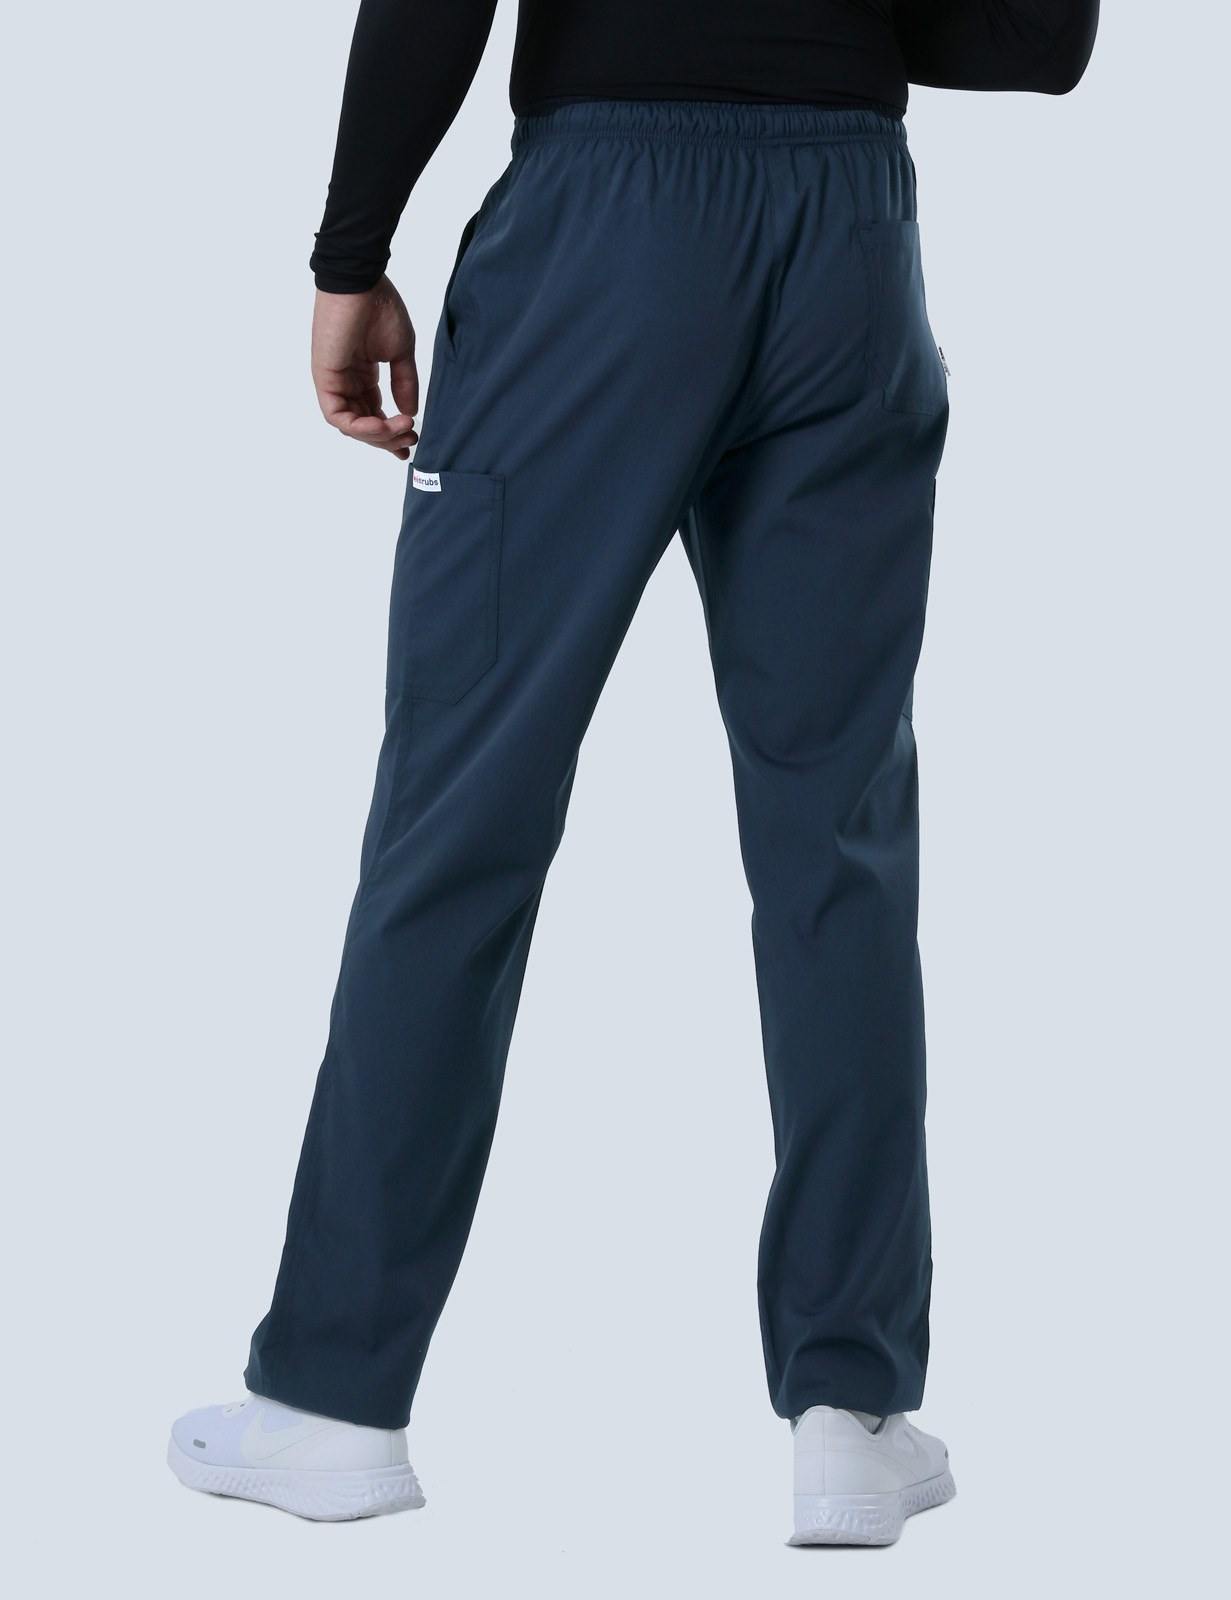 Men's Cargo Performance Pants - Navy - Large - Tall - 3